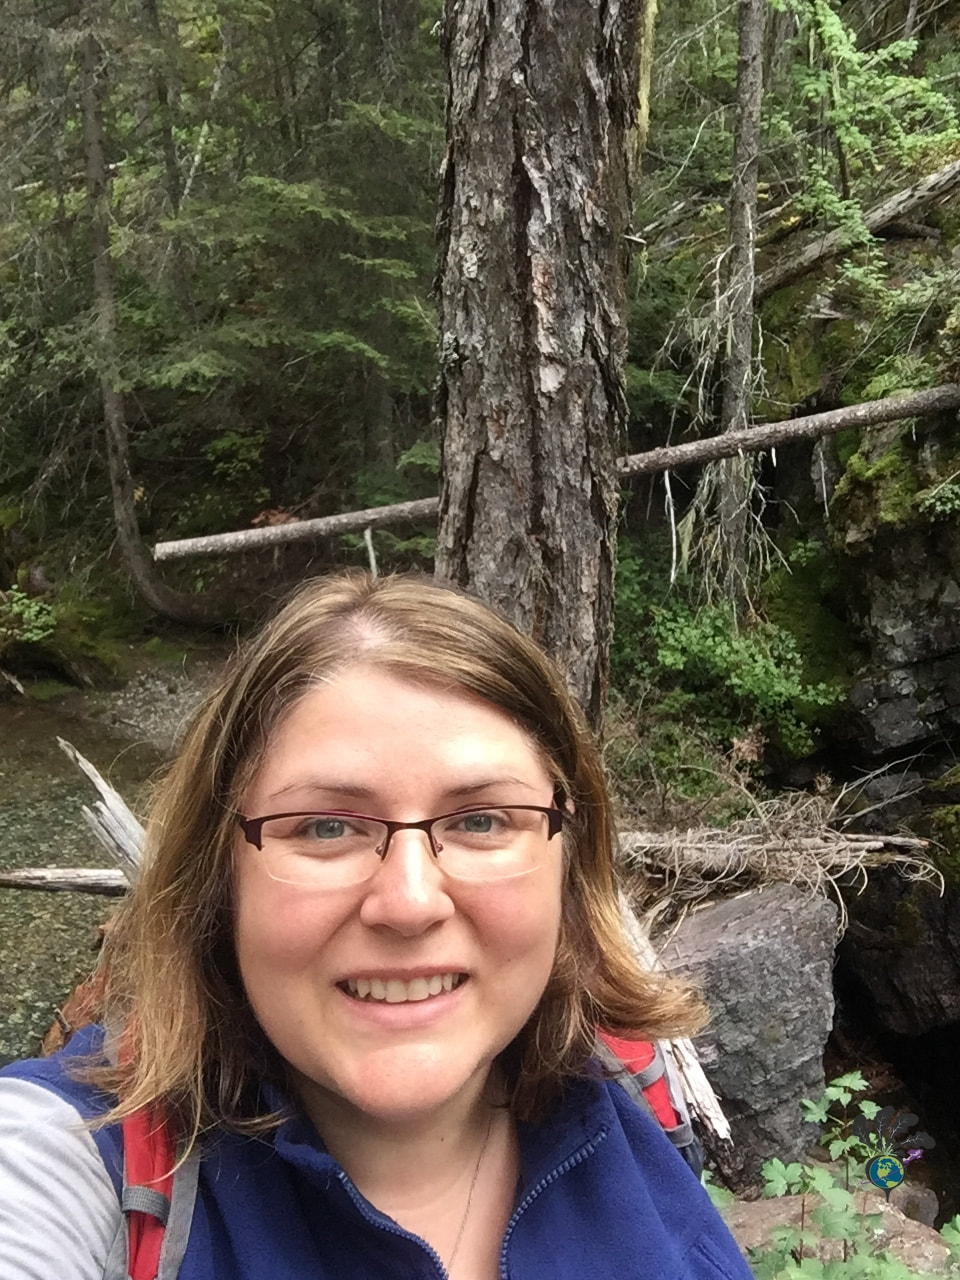 Selfie by the waterfall